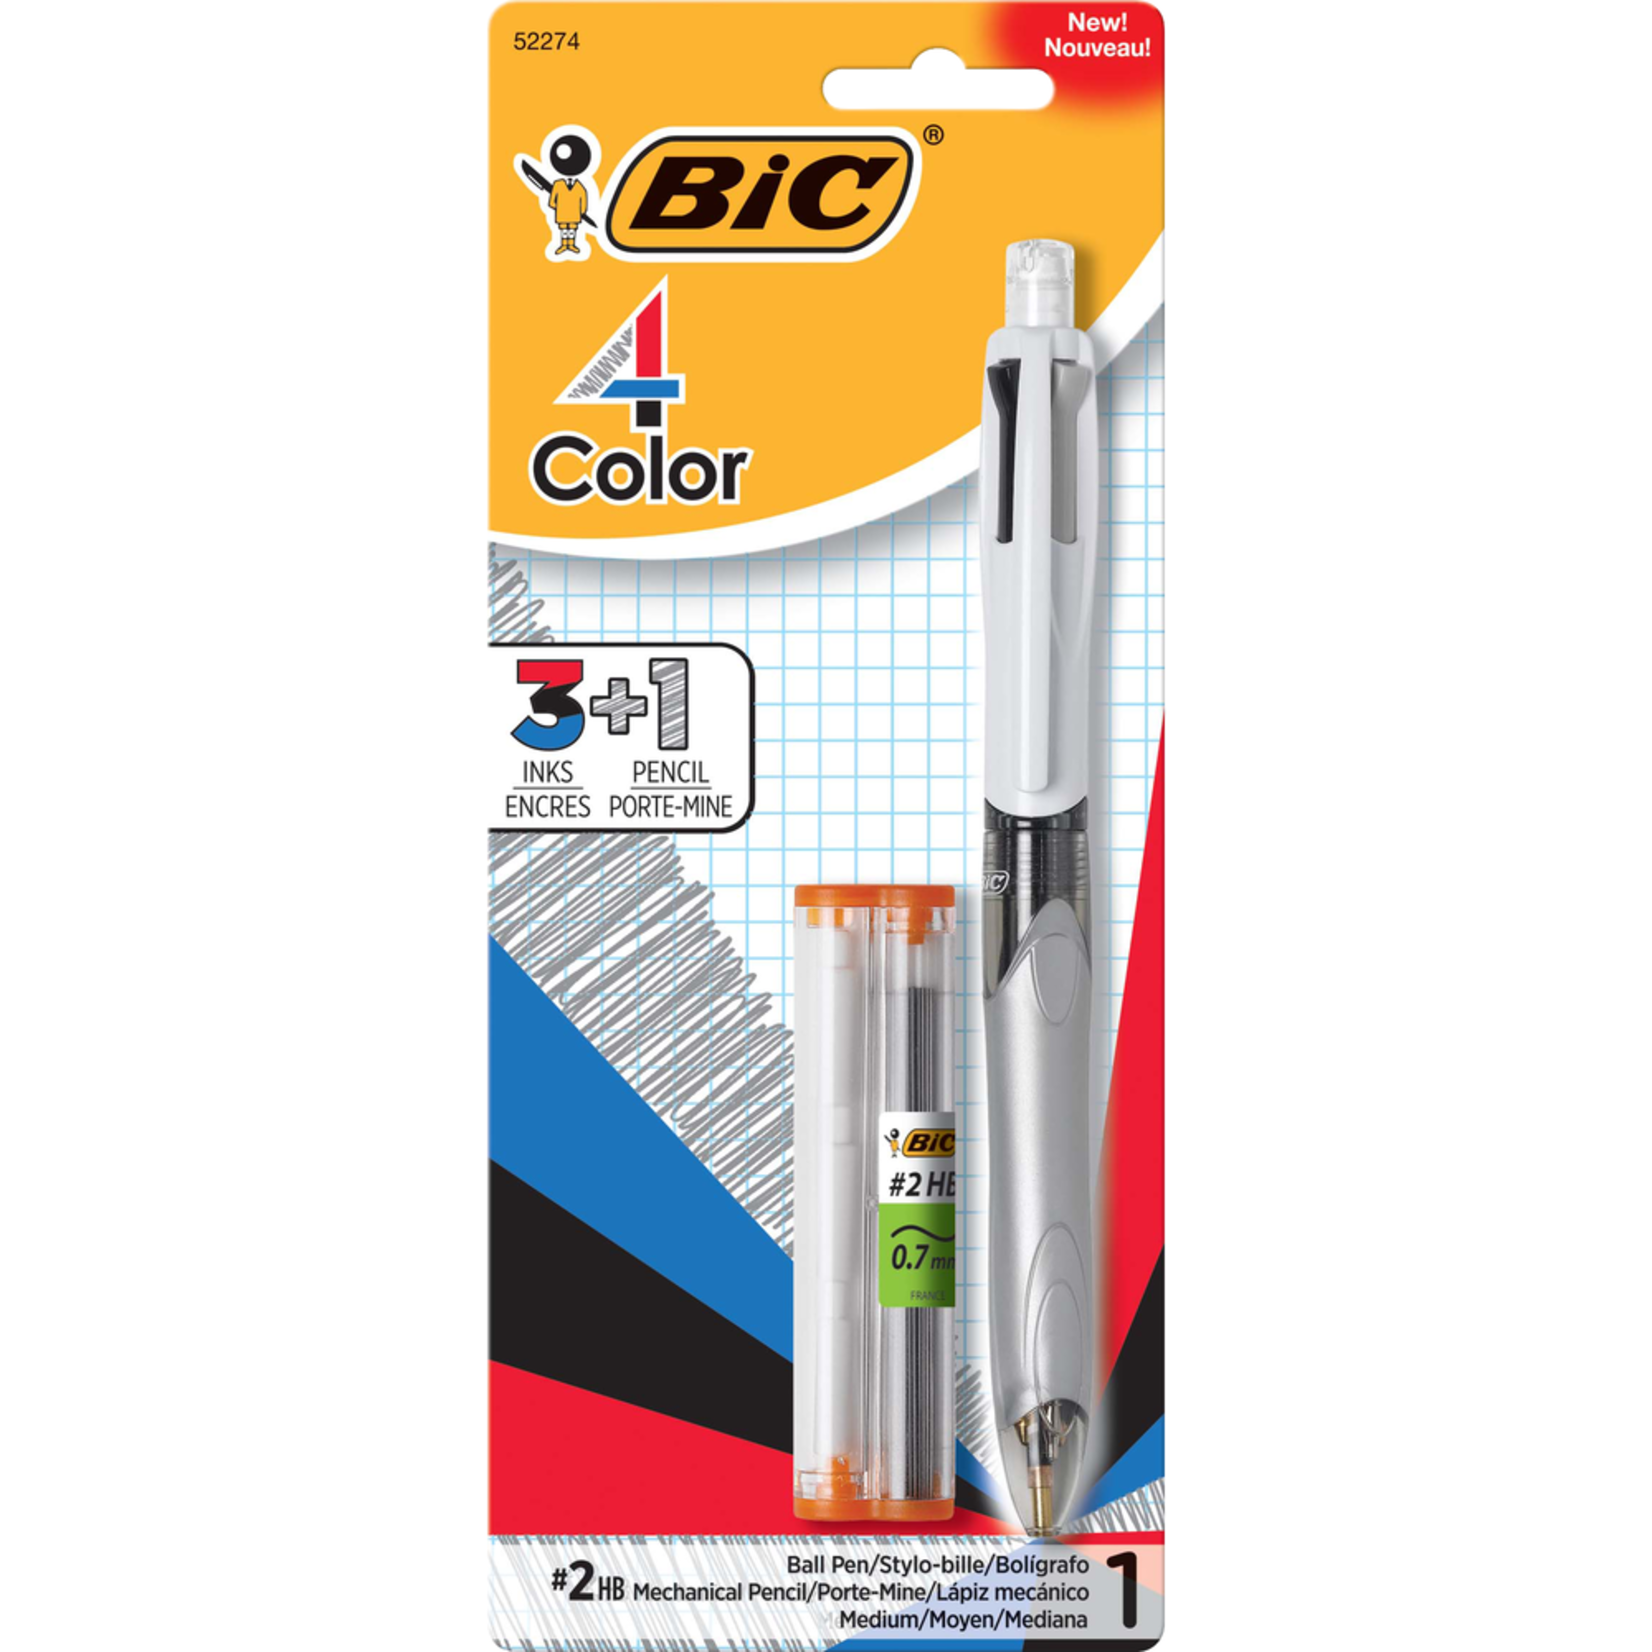 BIC BIC 4-Color 3-in-1 Retractable Ballpoint Pen w/ Mechanical Pencil